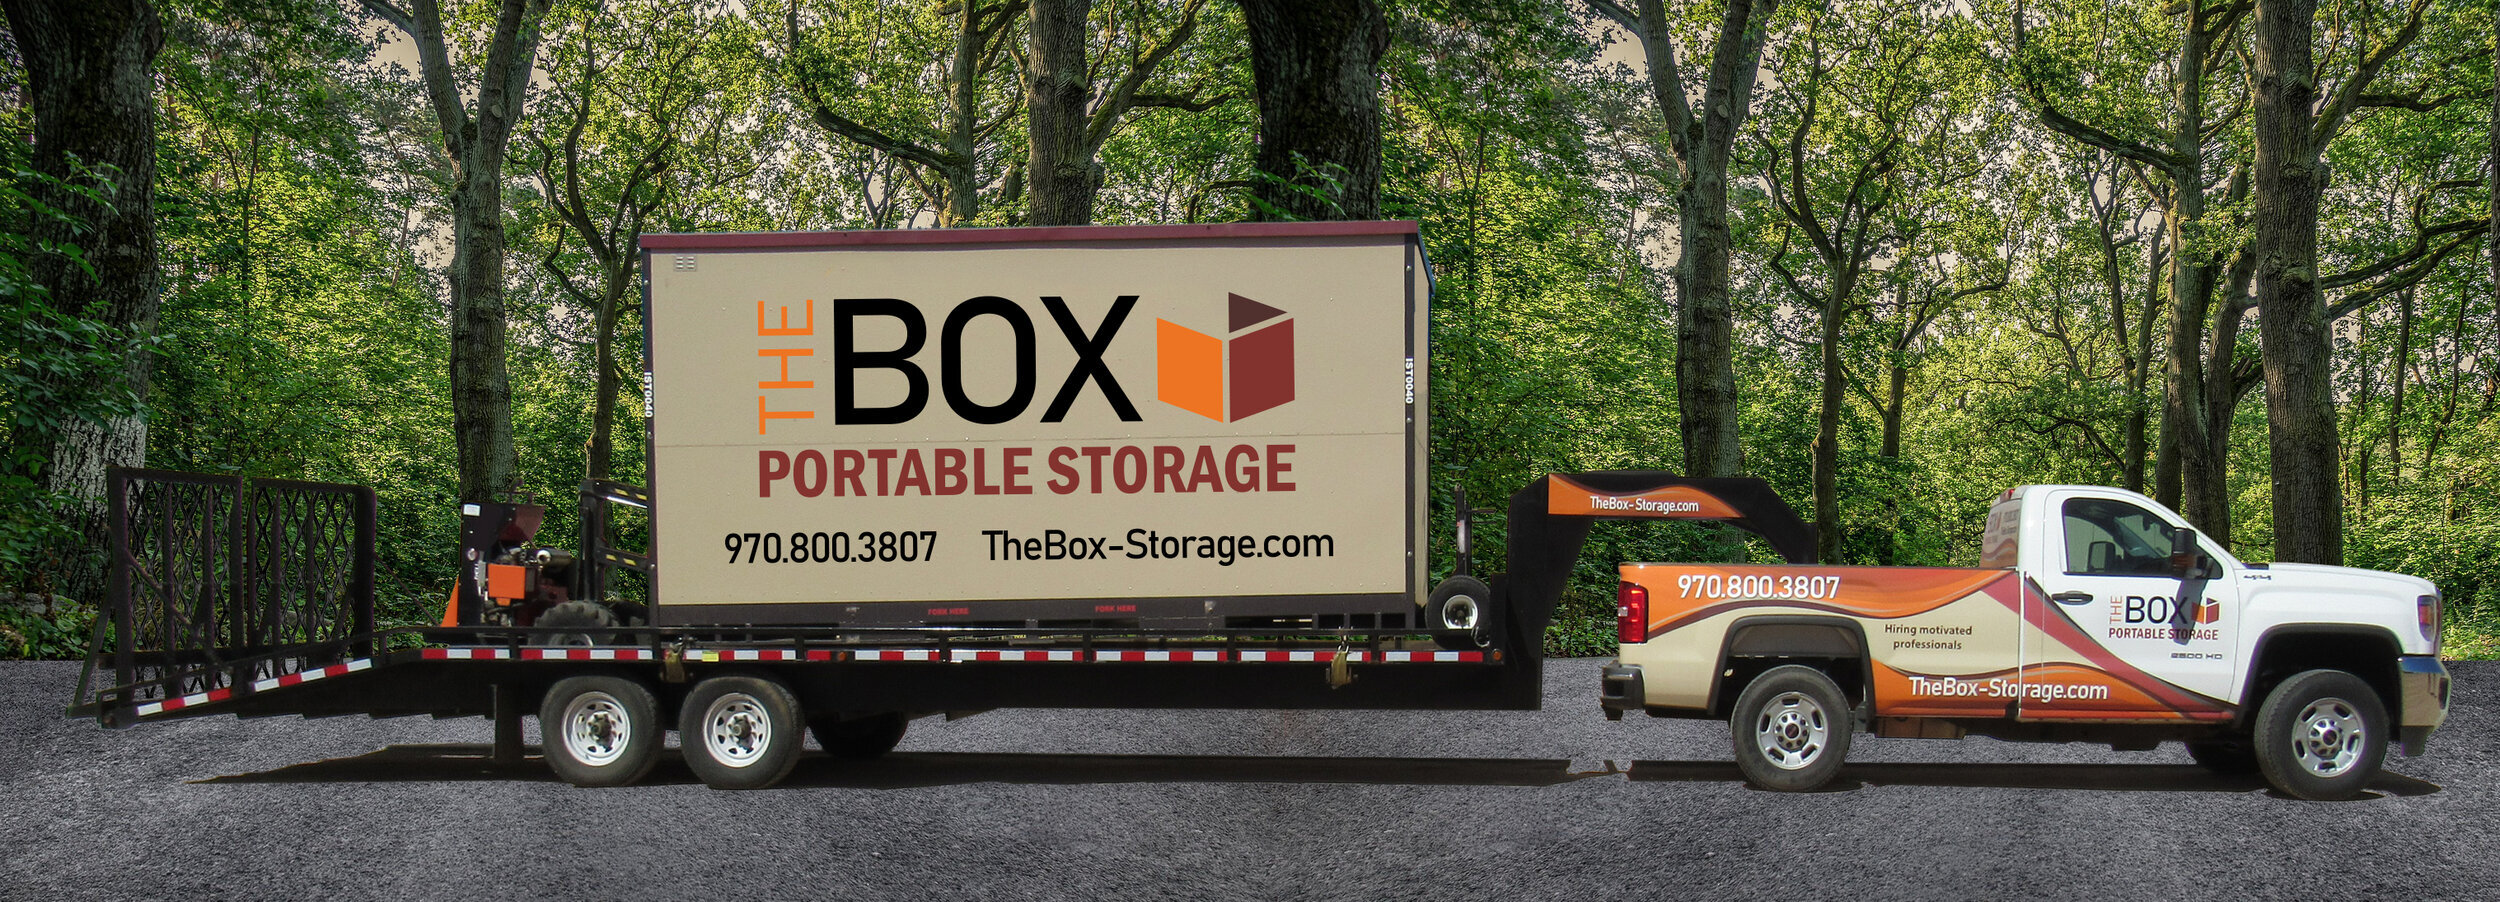 The Box Portable Storage